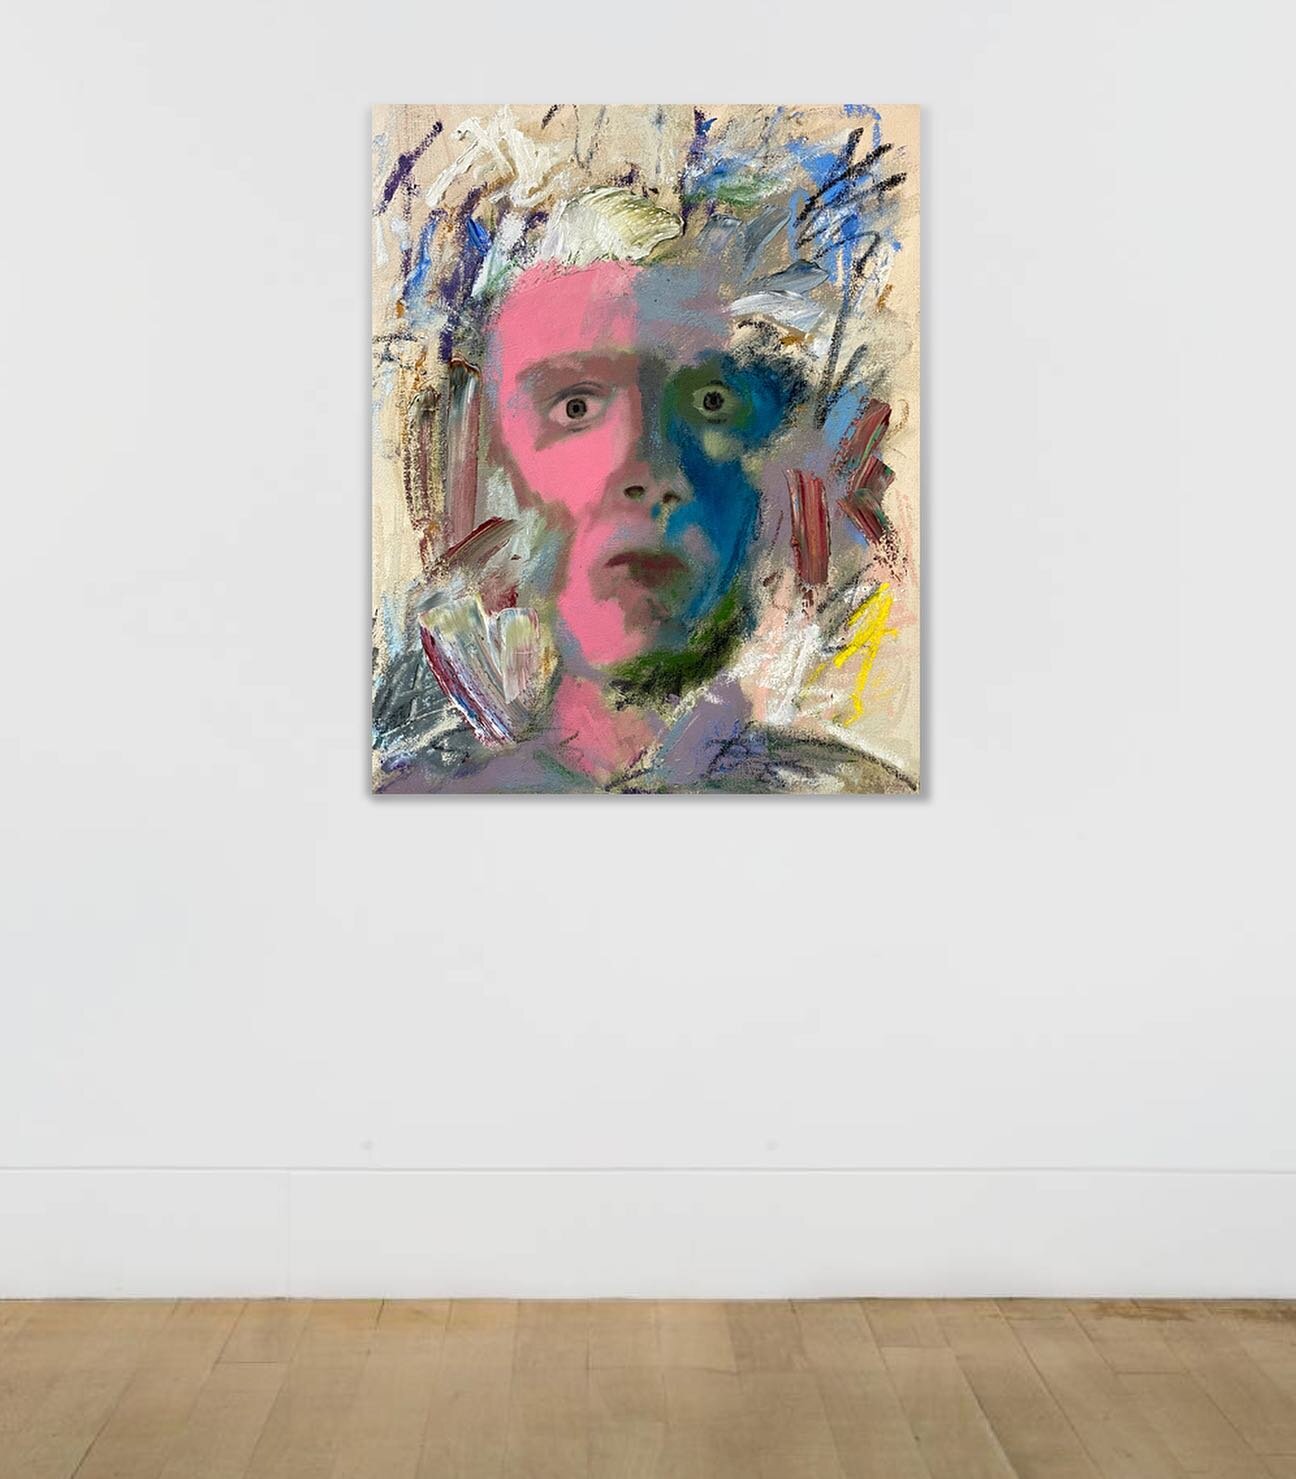 #Head #30x24 #oilpainting #portraitpainting #contemporaryart #contemporarypainting #galleryview #laartist